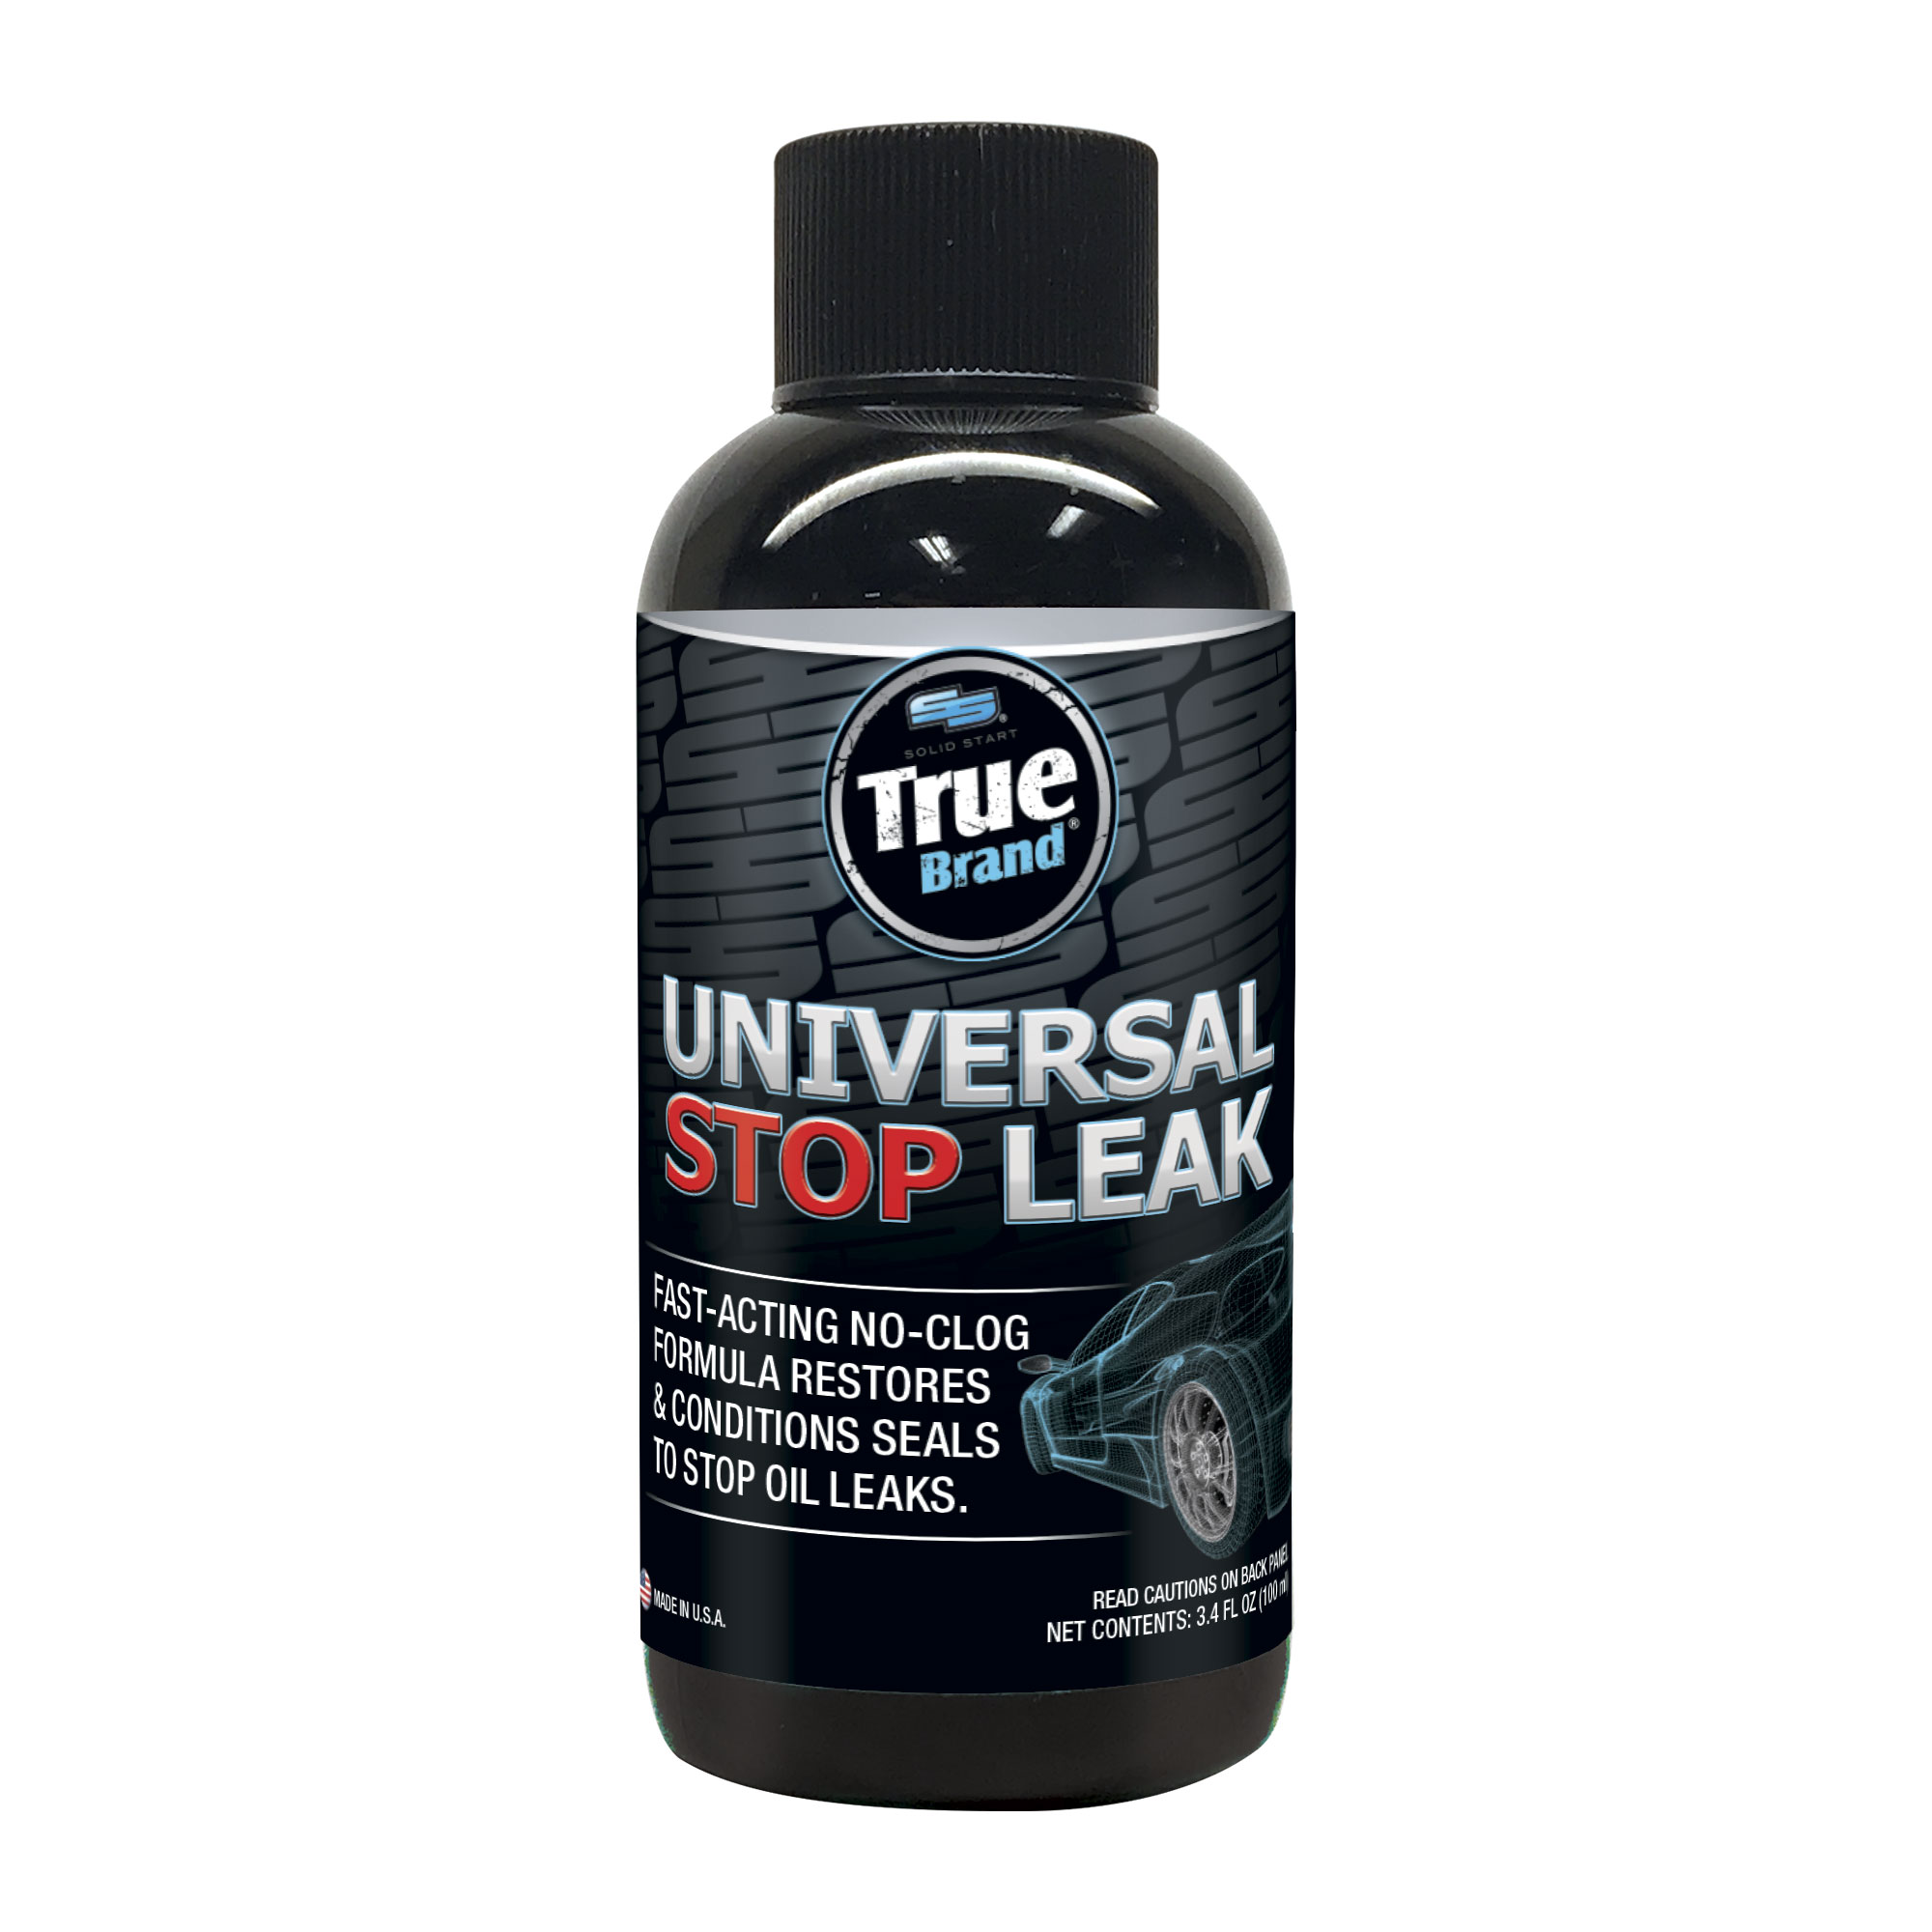 Universal Stop Leak - Solid Start